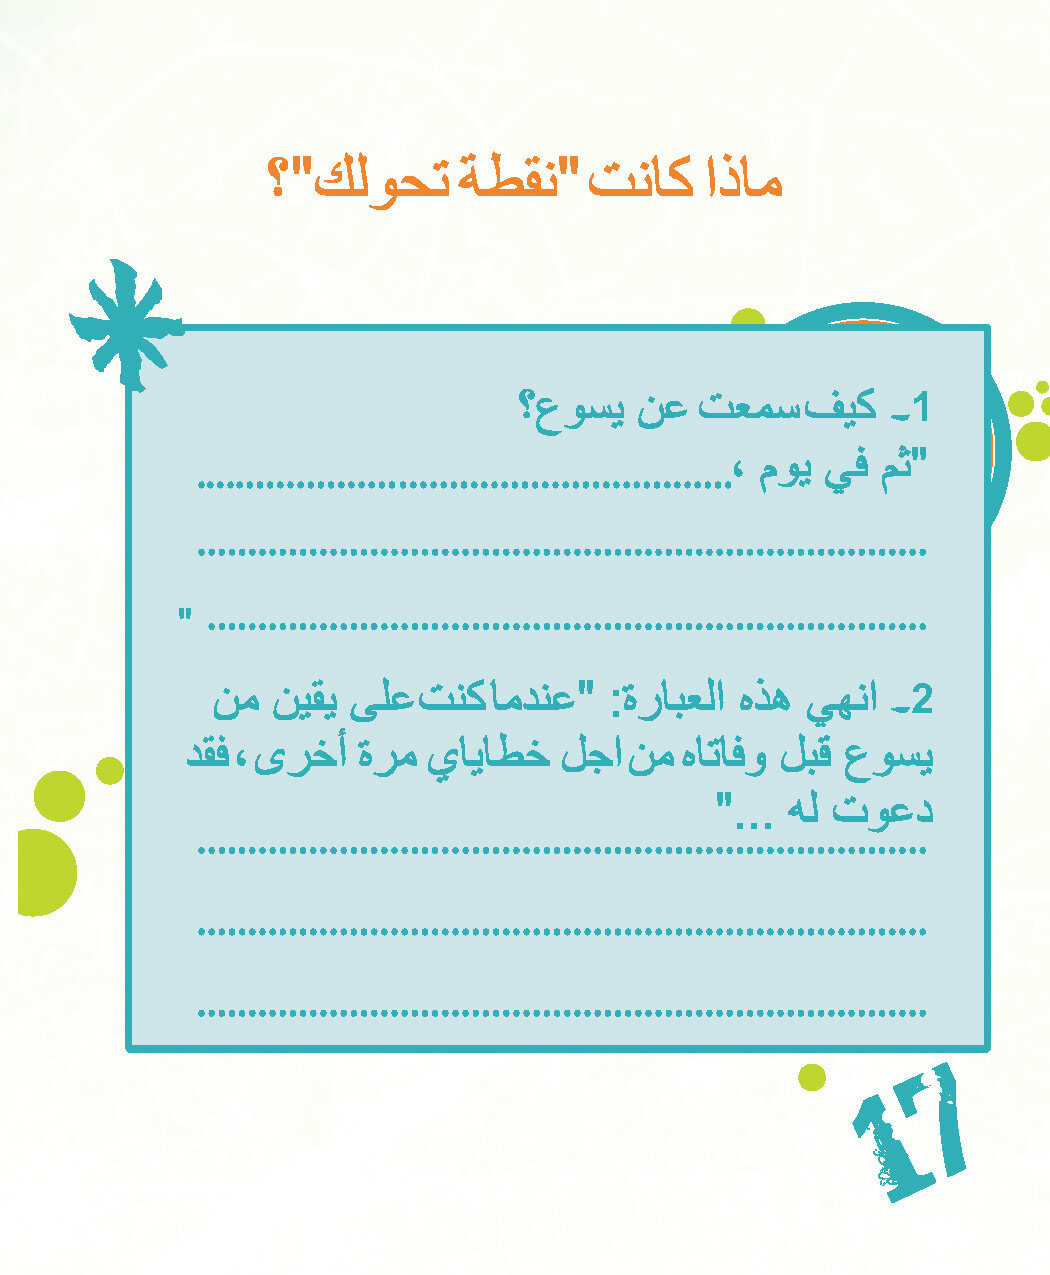 Arabic_Zubi_CDR-based_Page_16.jpg